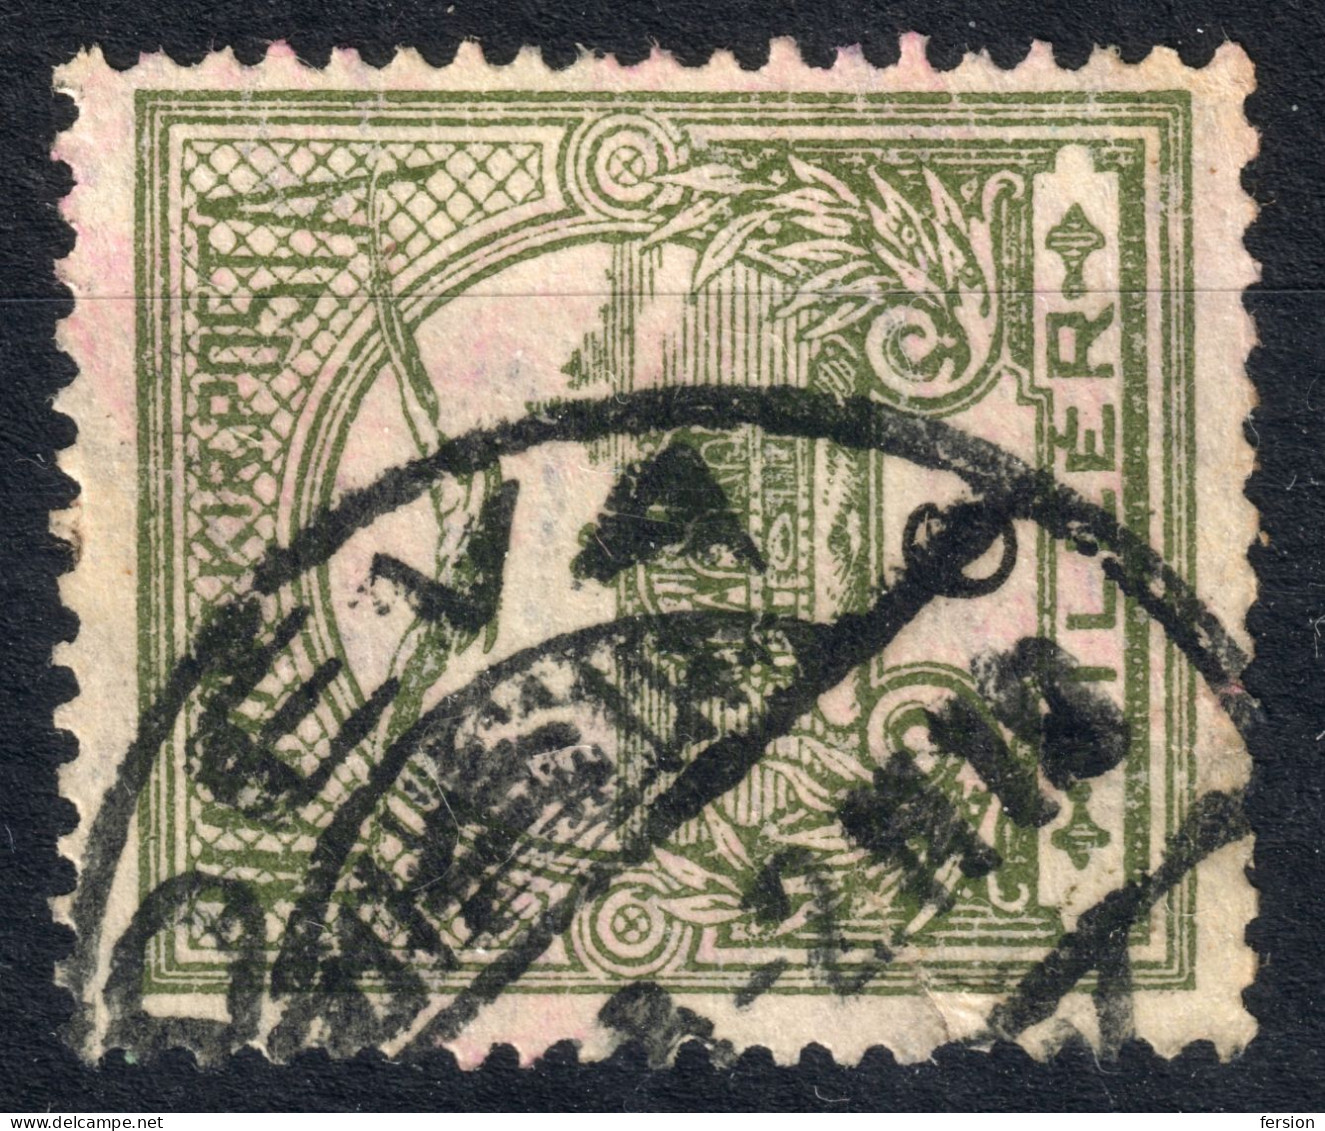 DÉVA DEVA Postmark / TURUL Crown 1910's Hungary Romania Transylvania Hunyad County KuK - 6 Fill - Transylvania